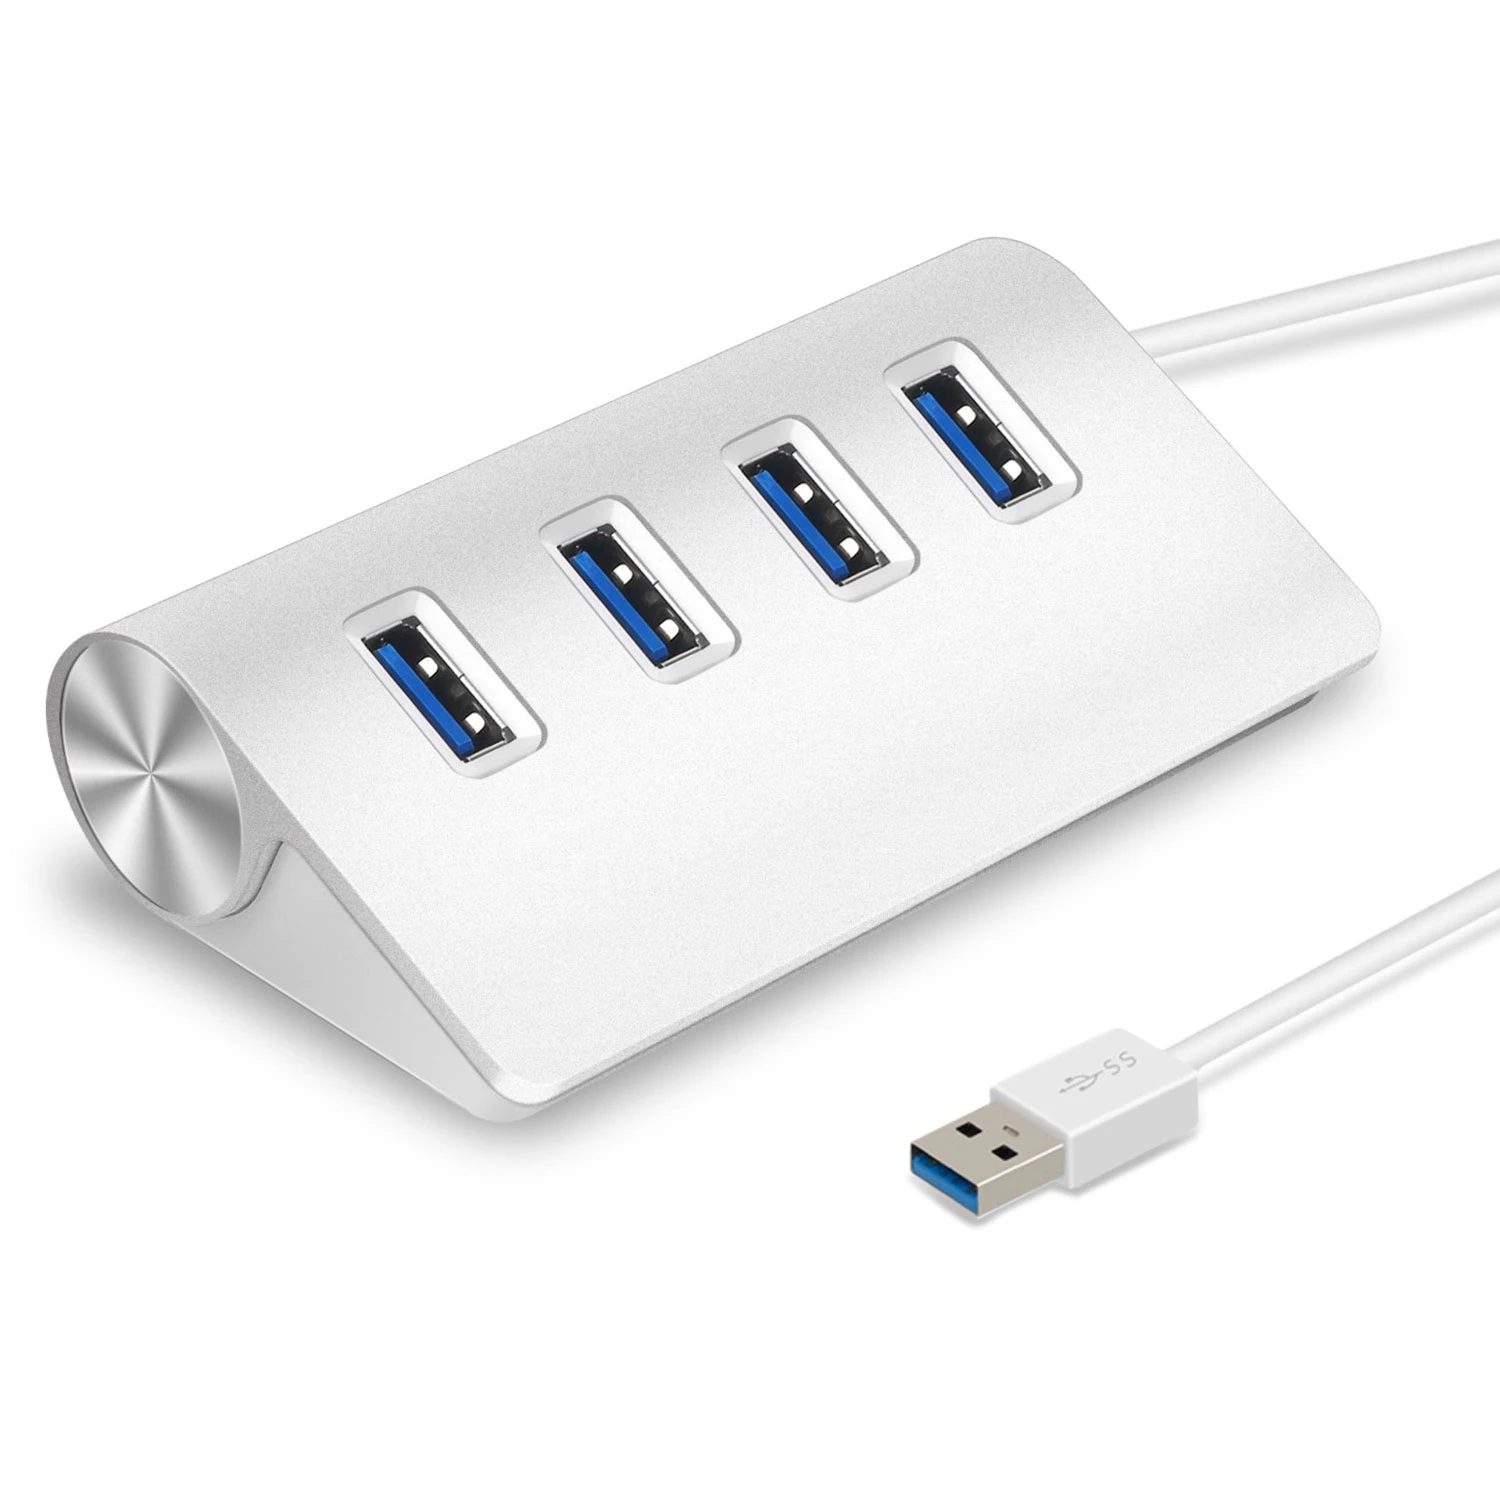 USB3.0 Hub - 4 Ports, Aluminum, 5Gbps, File & Video Transfer, U Disk, Flash Drive, Mouse, Camera